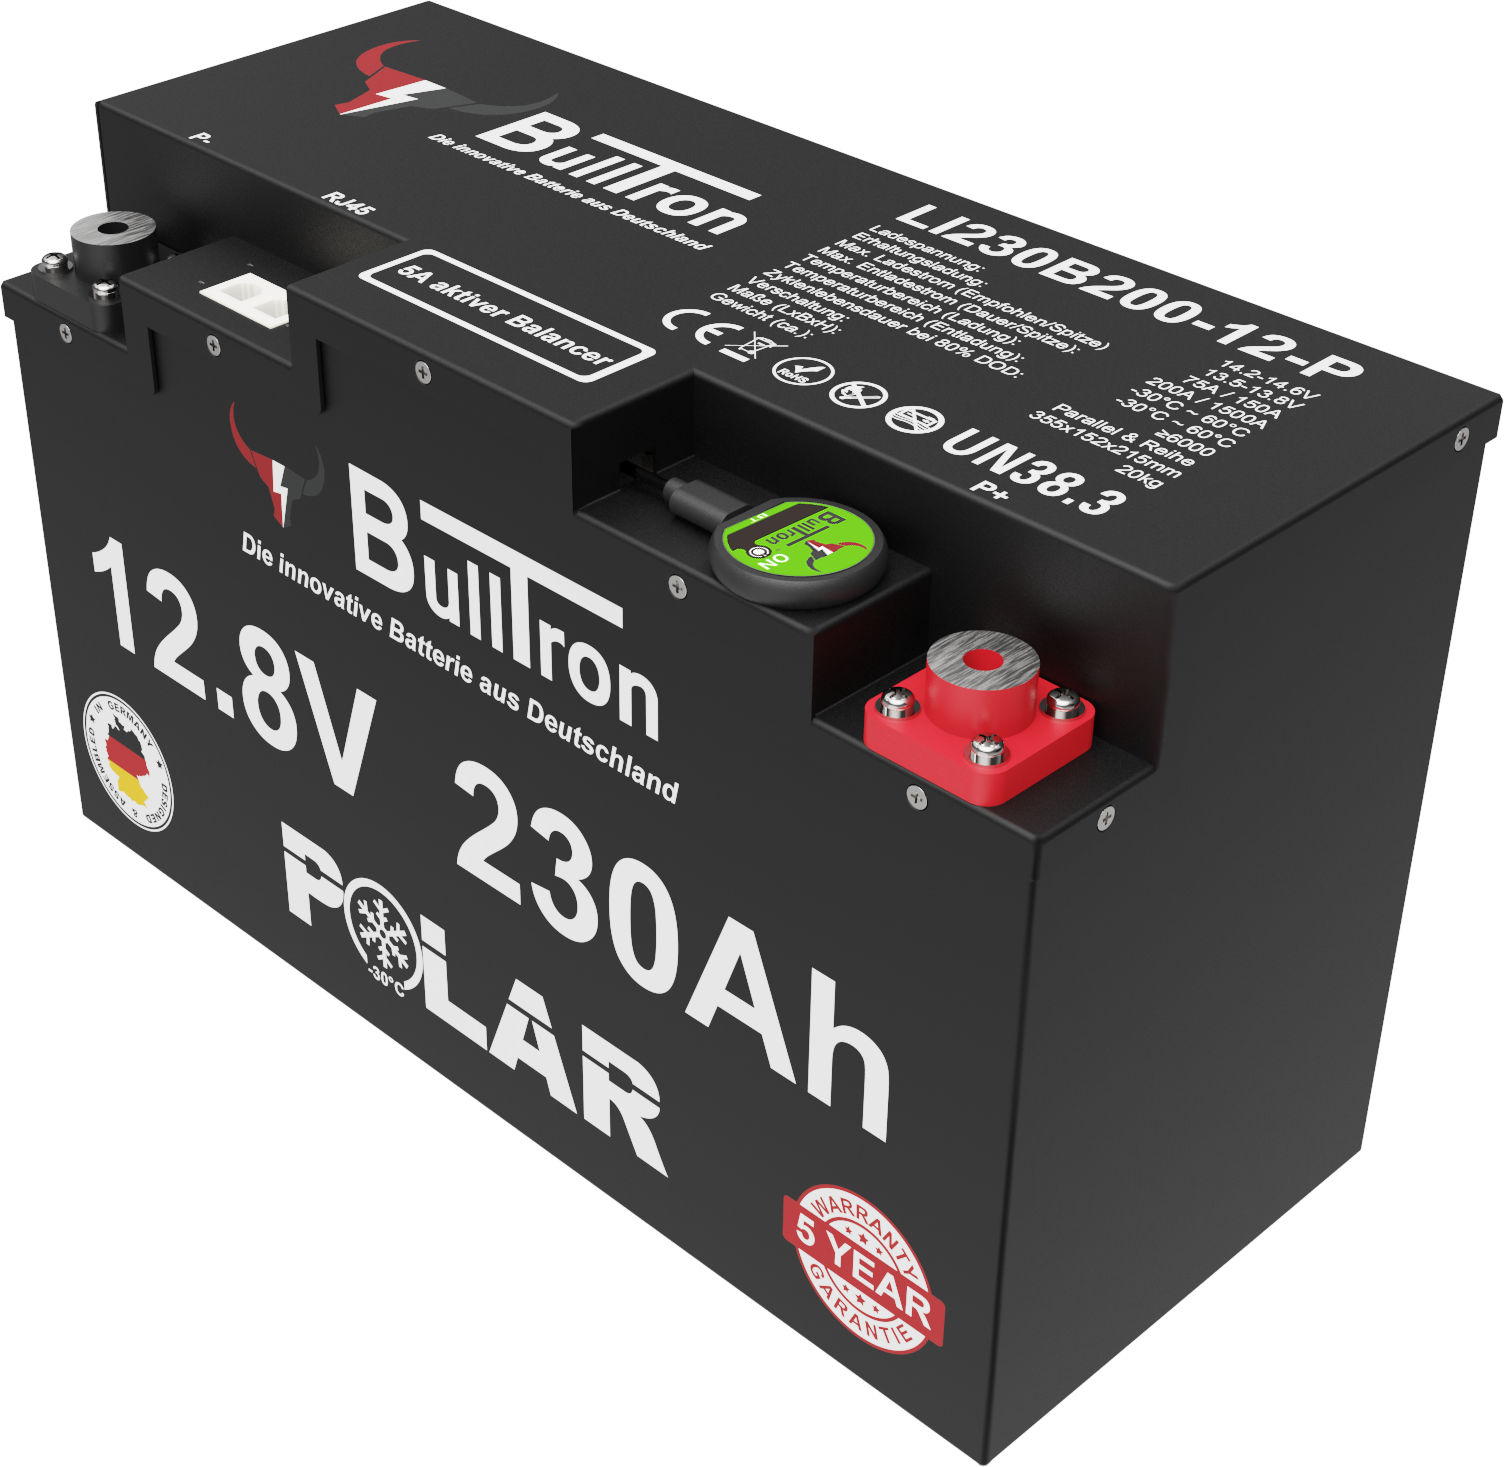 230Ah BullTron Polar LiFePO4 12.8V Akku mit Smart BMS, Bluetooth App und Heizung